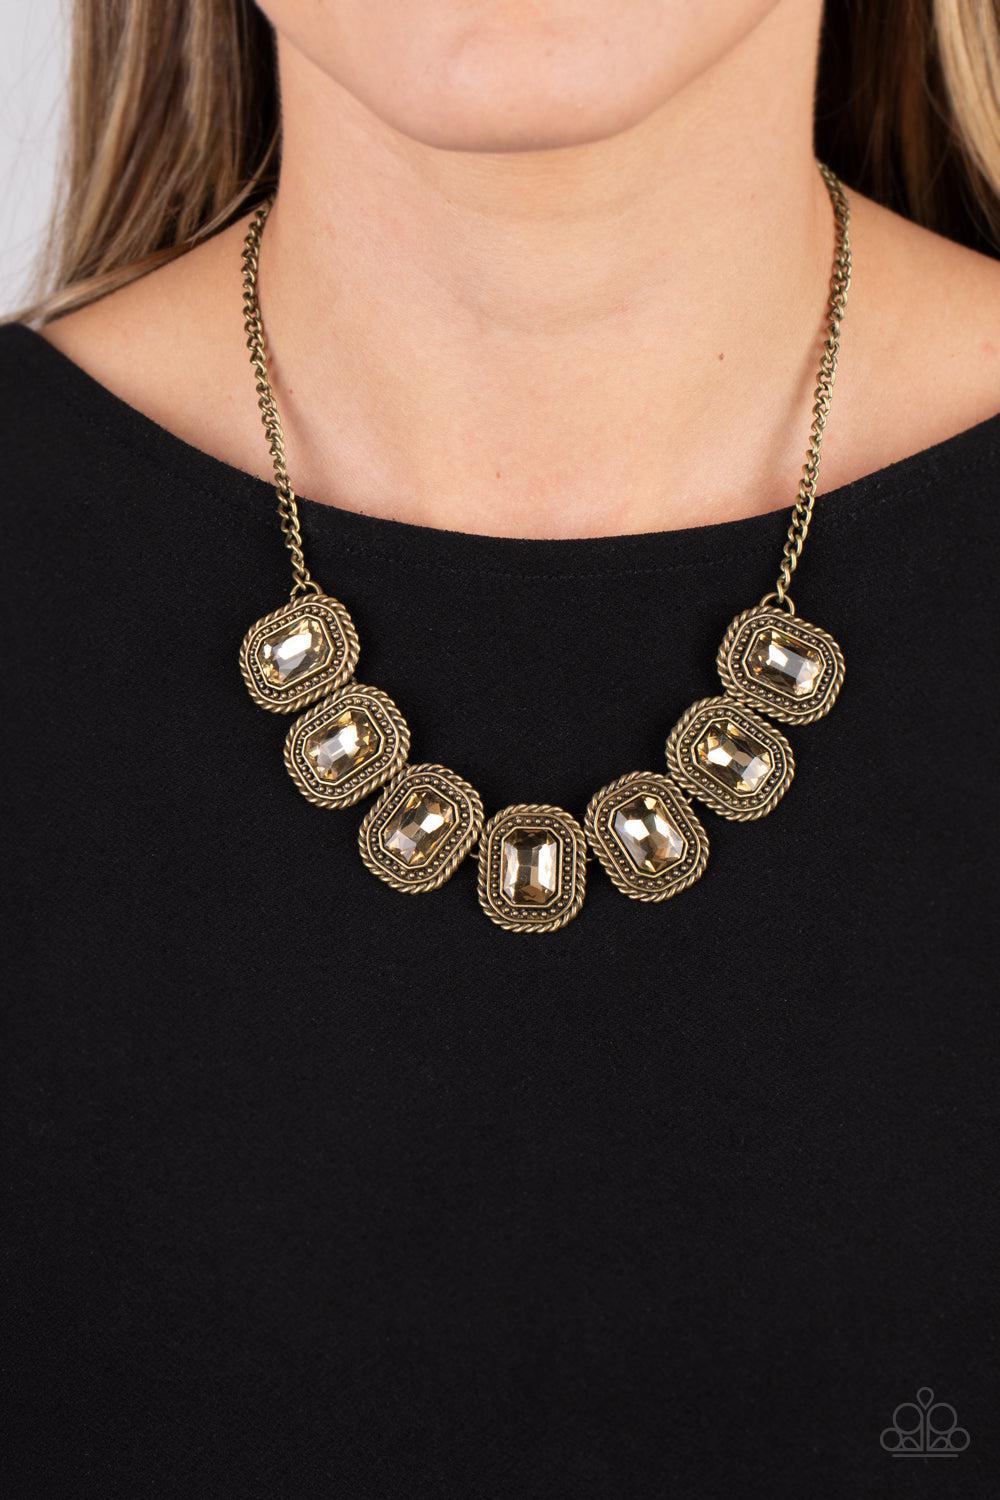 Iced Iron Brass Rhinestone Necklace - Paparazzi Accessories-on model - CarasShop.com - $5 Jewelry by Cara Jewels